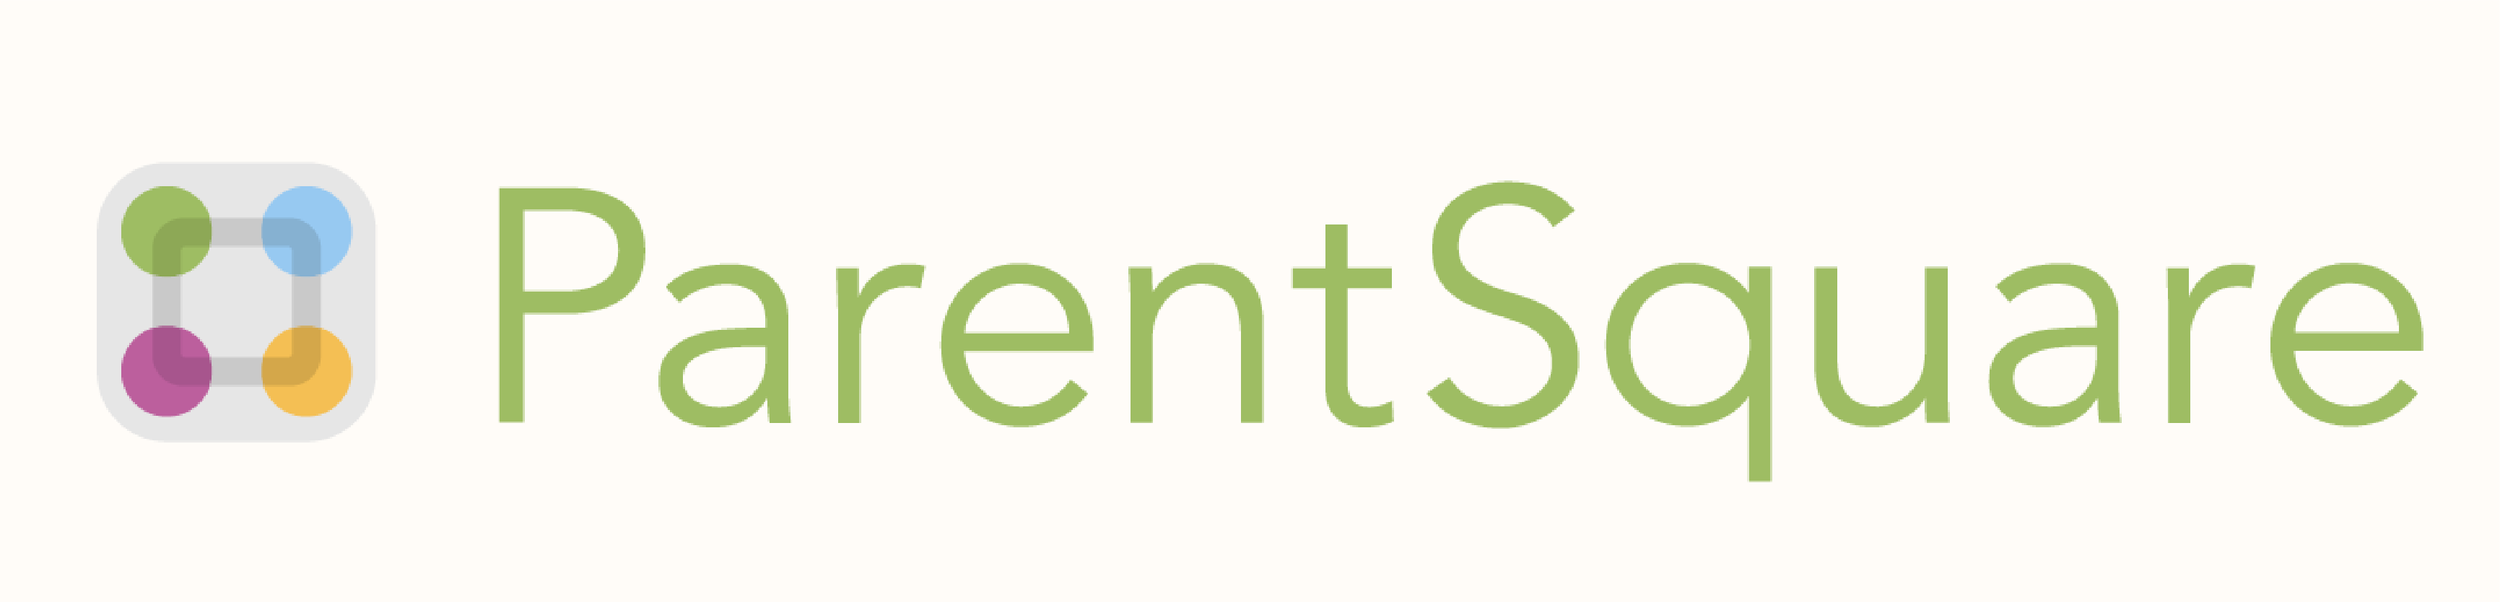 client-logos-17.png